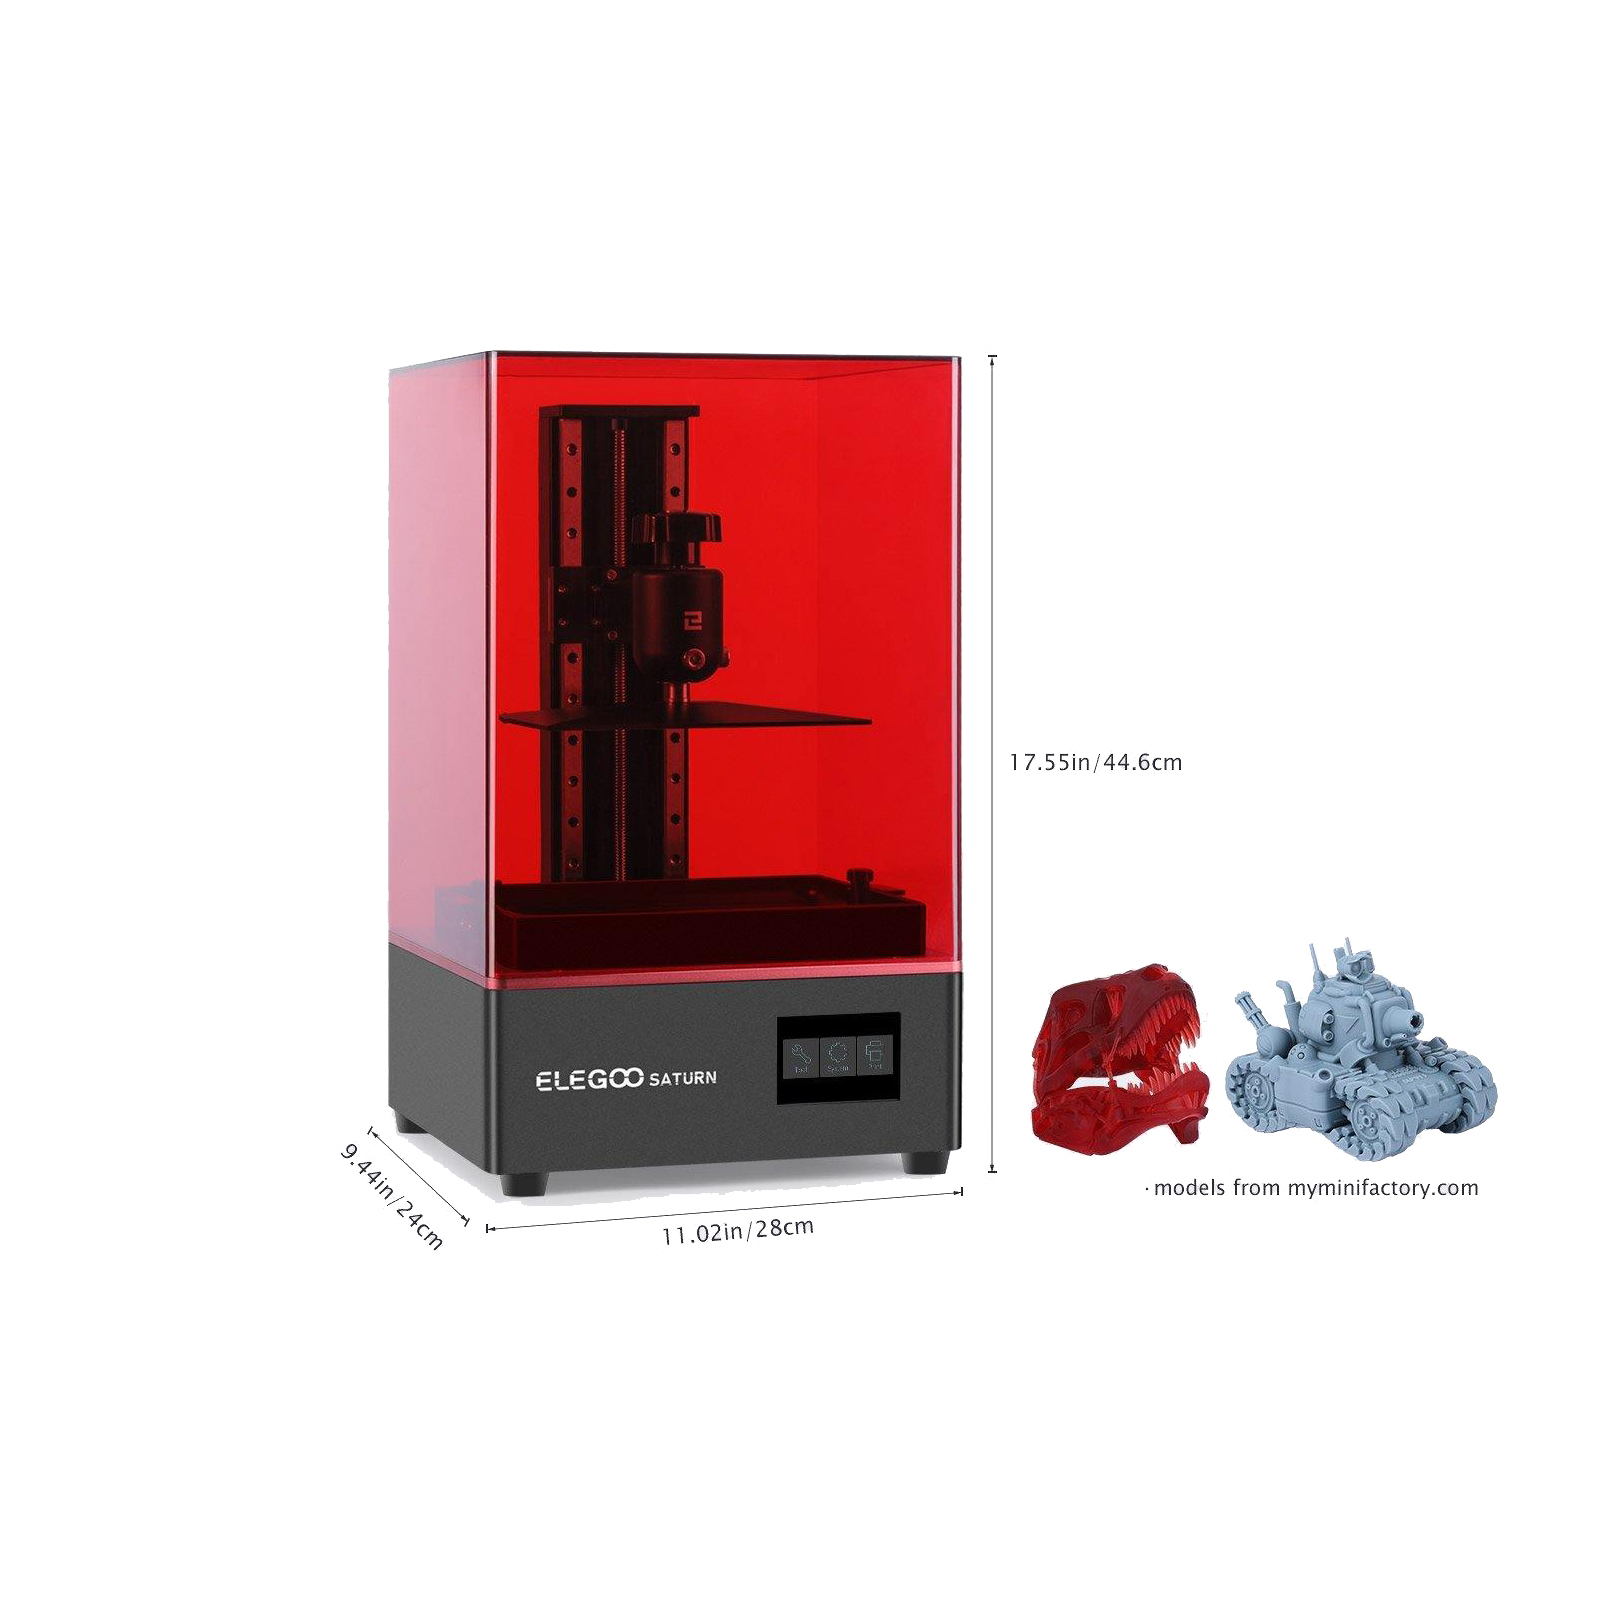 ELEGOOreg-SATURN-MSLA-4K-89quot-MONOCHROME-LCD-Resin-3D-Printer-UV-Photocuring-LCD-Resin-3D-Printer--1825672-2